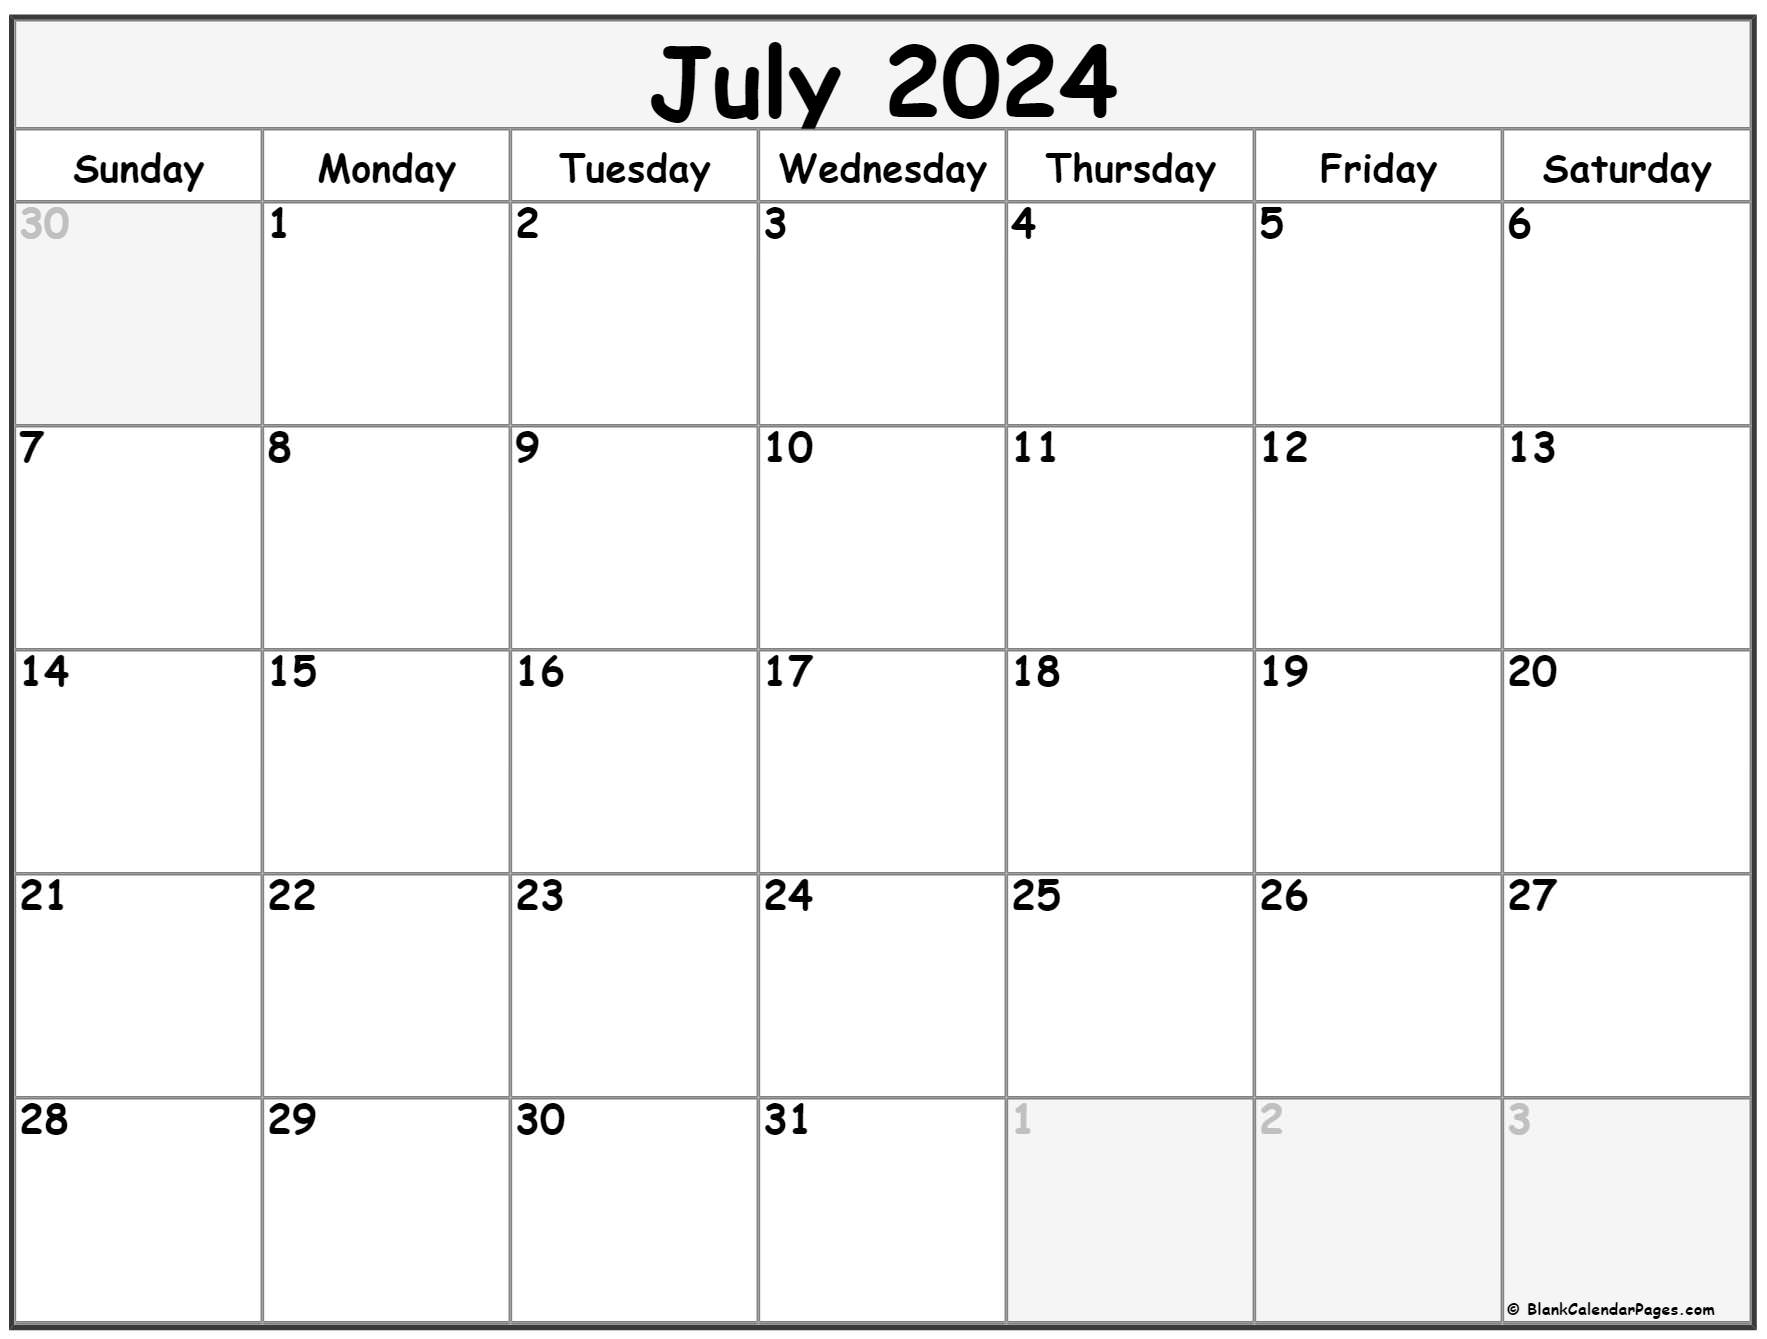 July 2024 Calendar | Free Printable Calendar | Blank July 2024 Calendar Printable